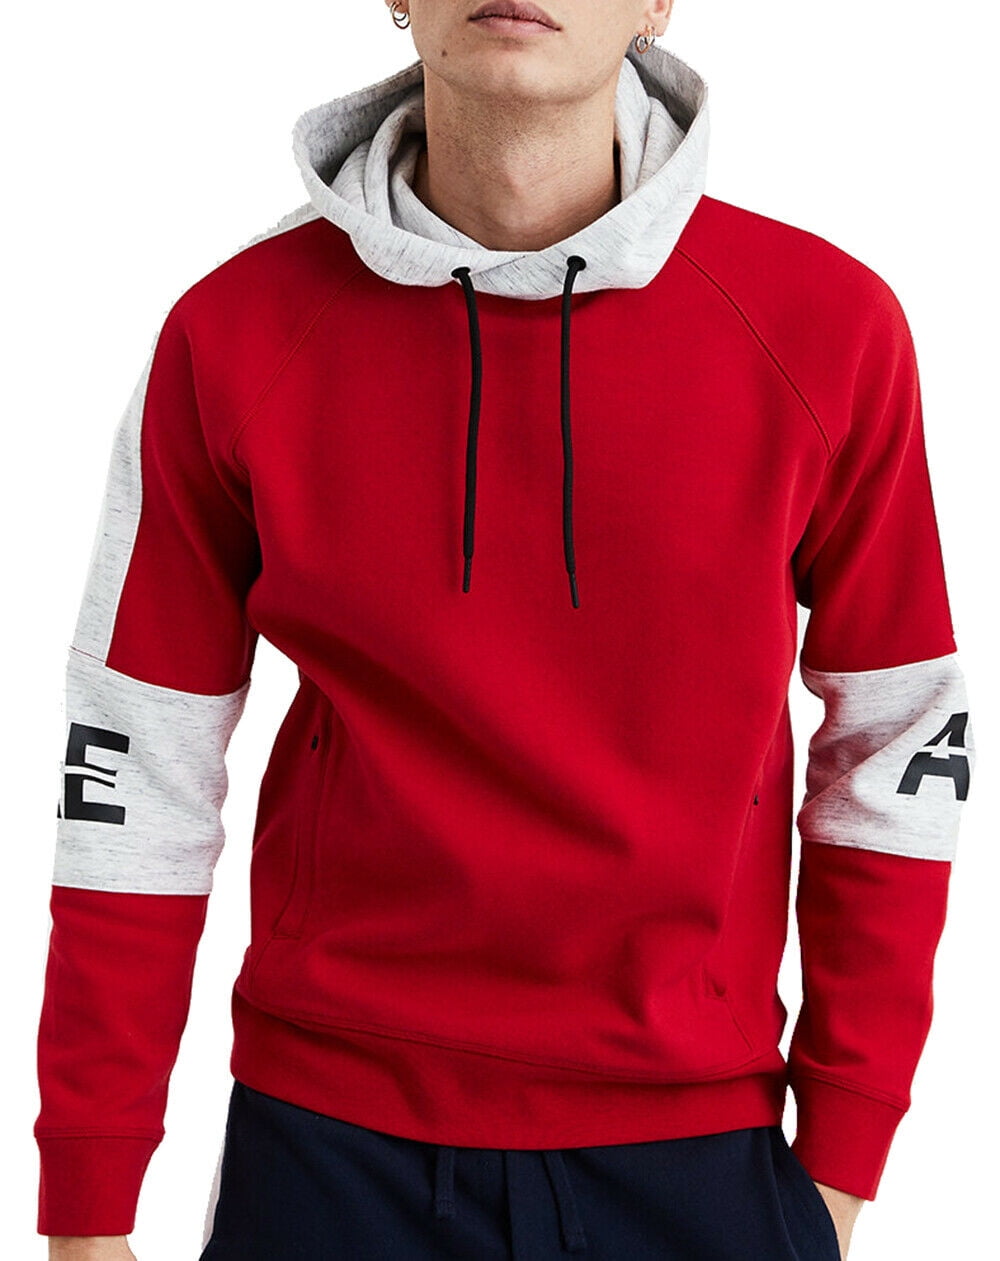 L American Eagle Men's Super Soft Hoodie Red Sweatshirt 